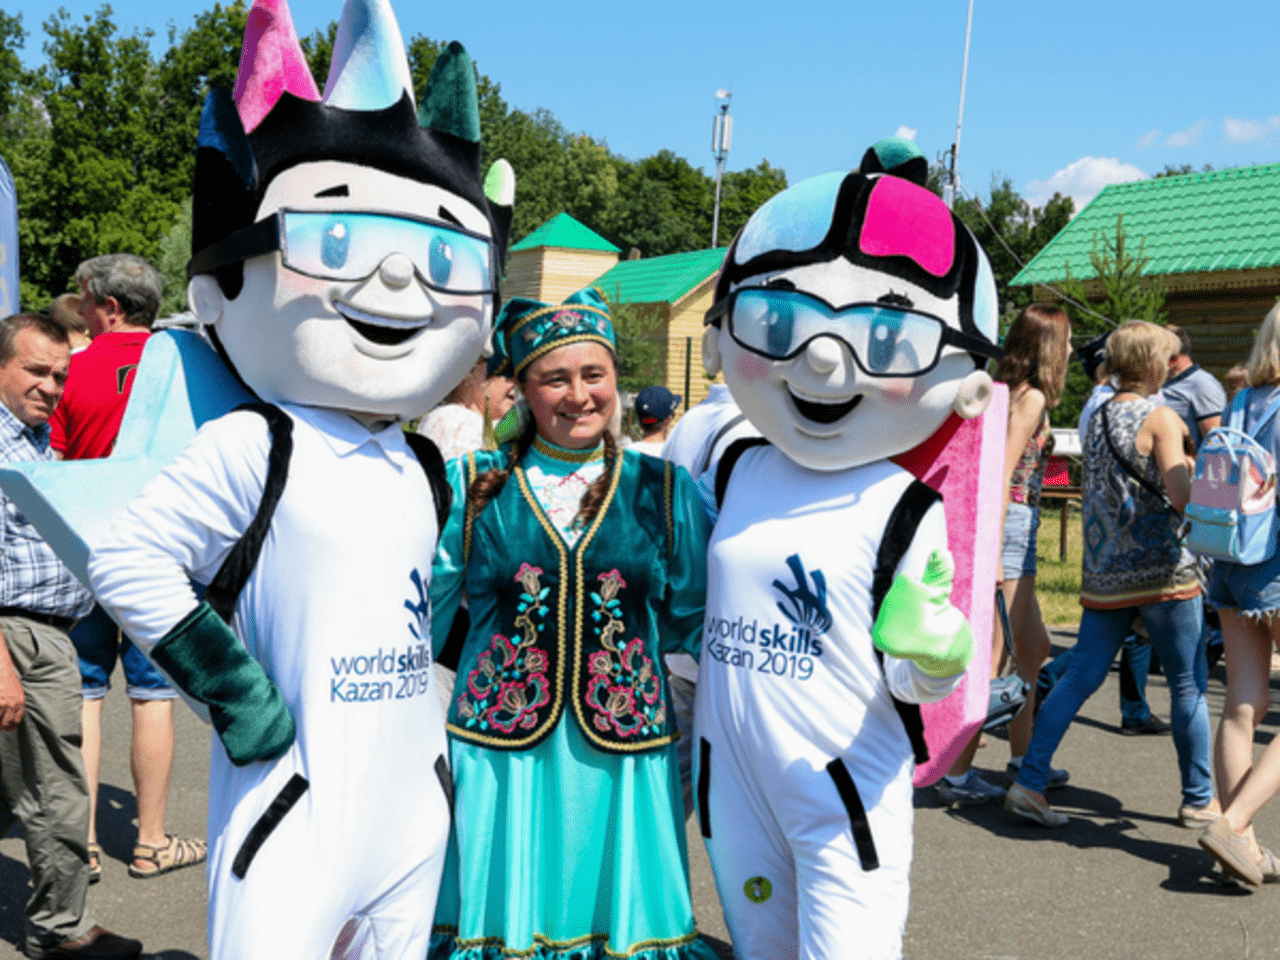 Welcome Almaz and Altyn the WorldSkills Kazan 2019 Mascots